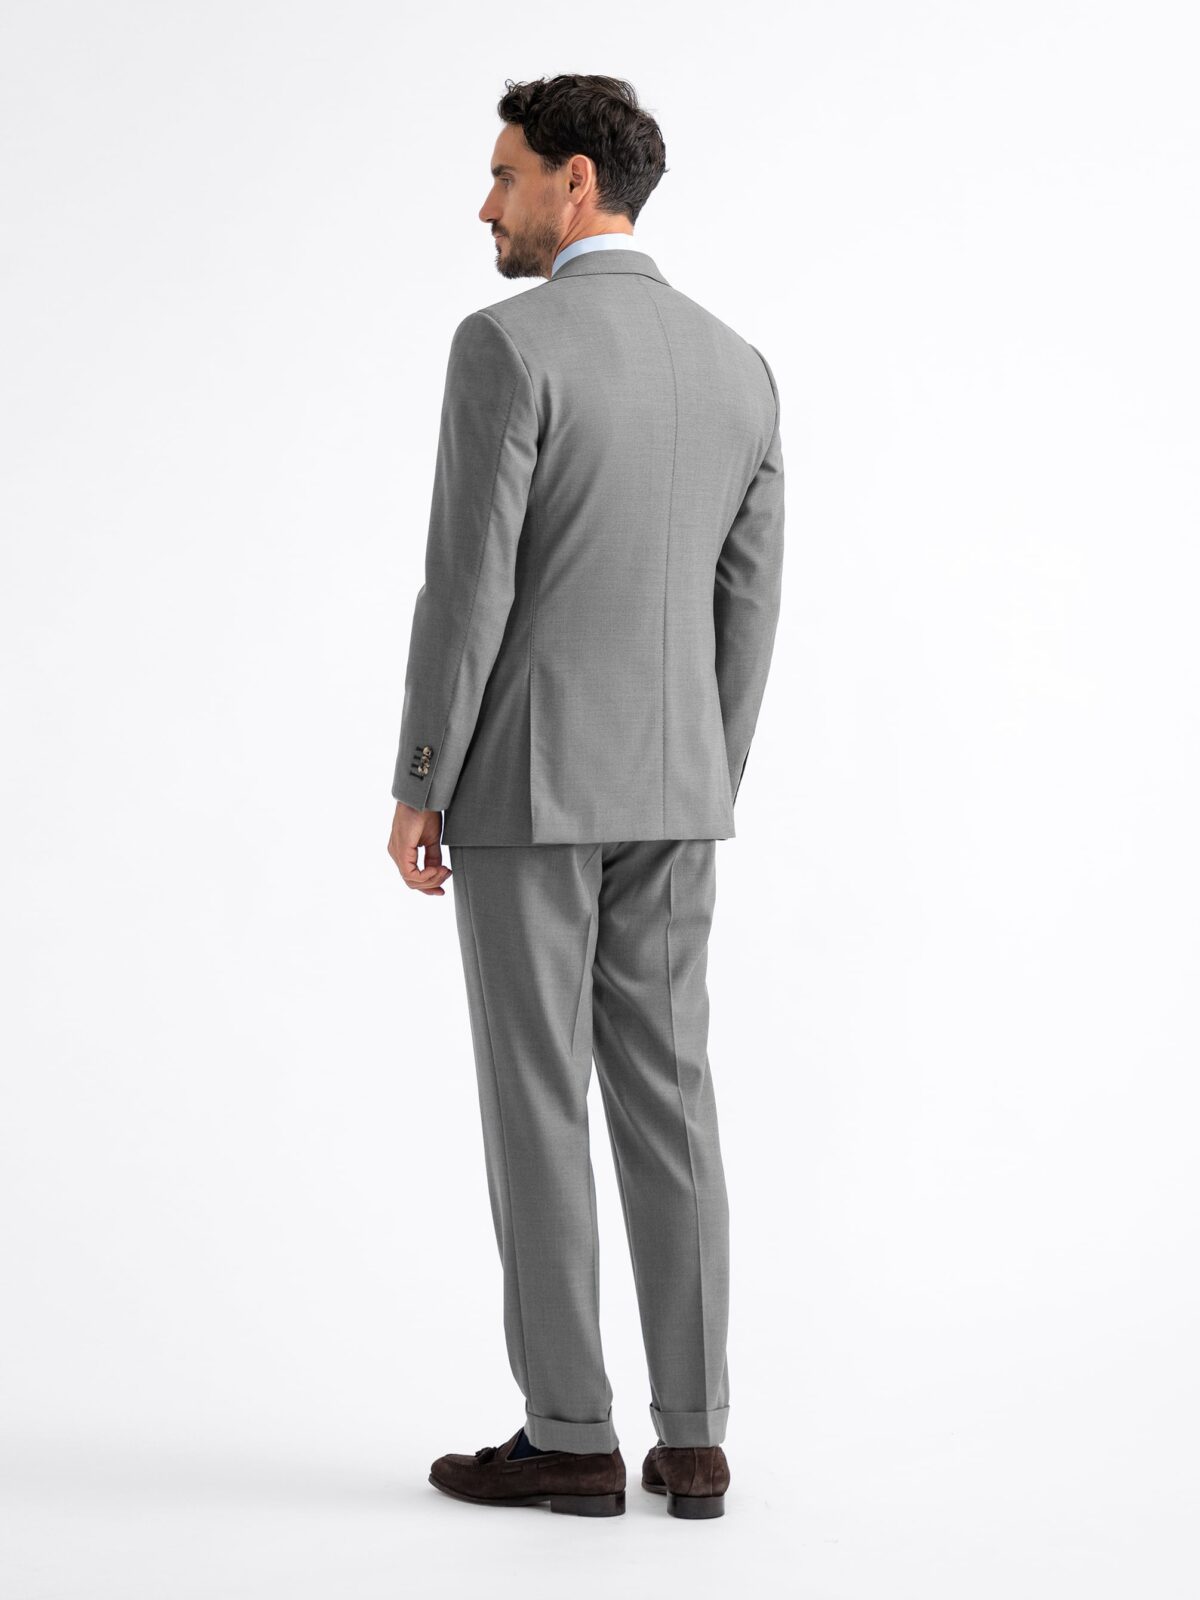 Men's Grey Suits | Light Grey & Charcoal Suit | Burton UK